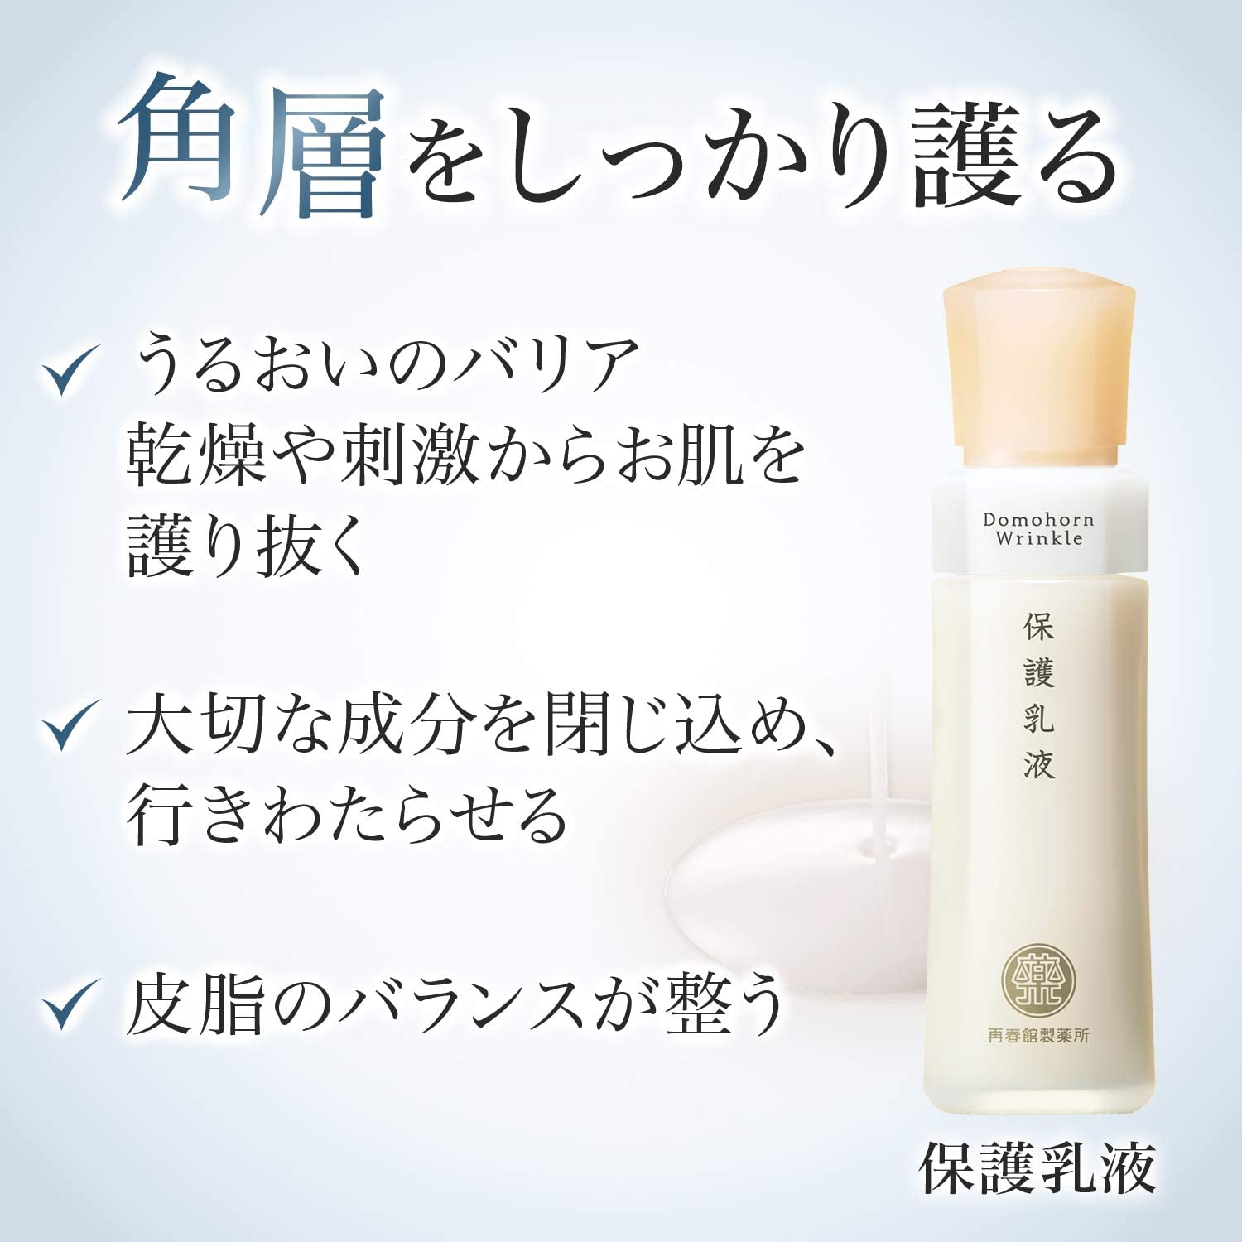 Domohorn Wrinkle(ドモホルンリンクル) 保護乳液の商品画像サムネ2 